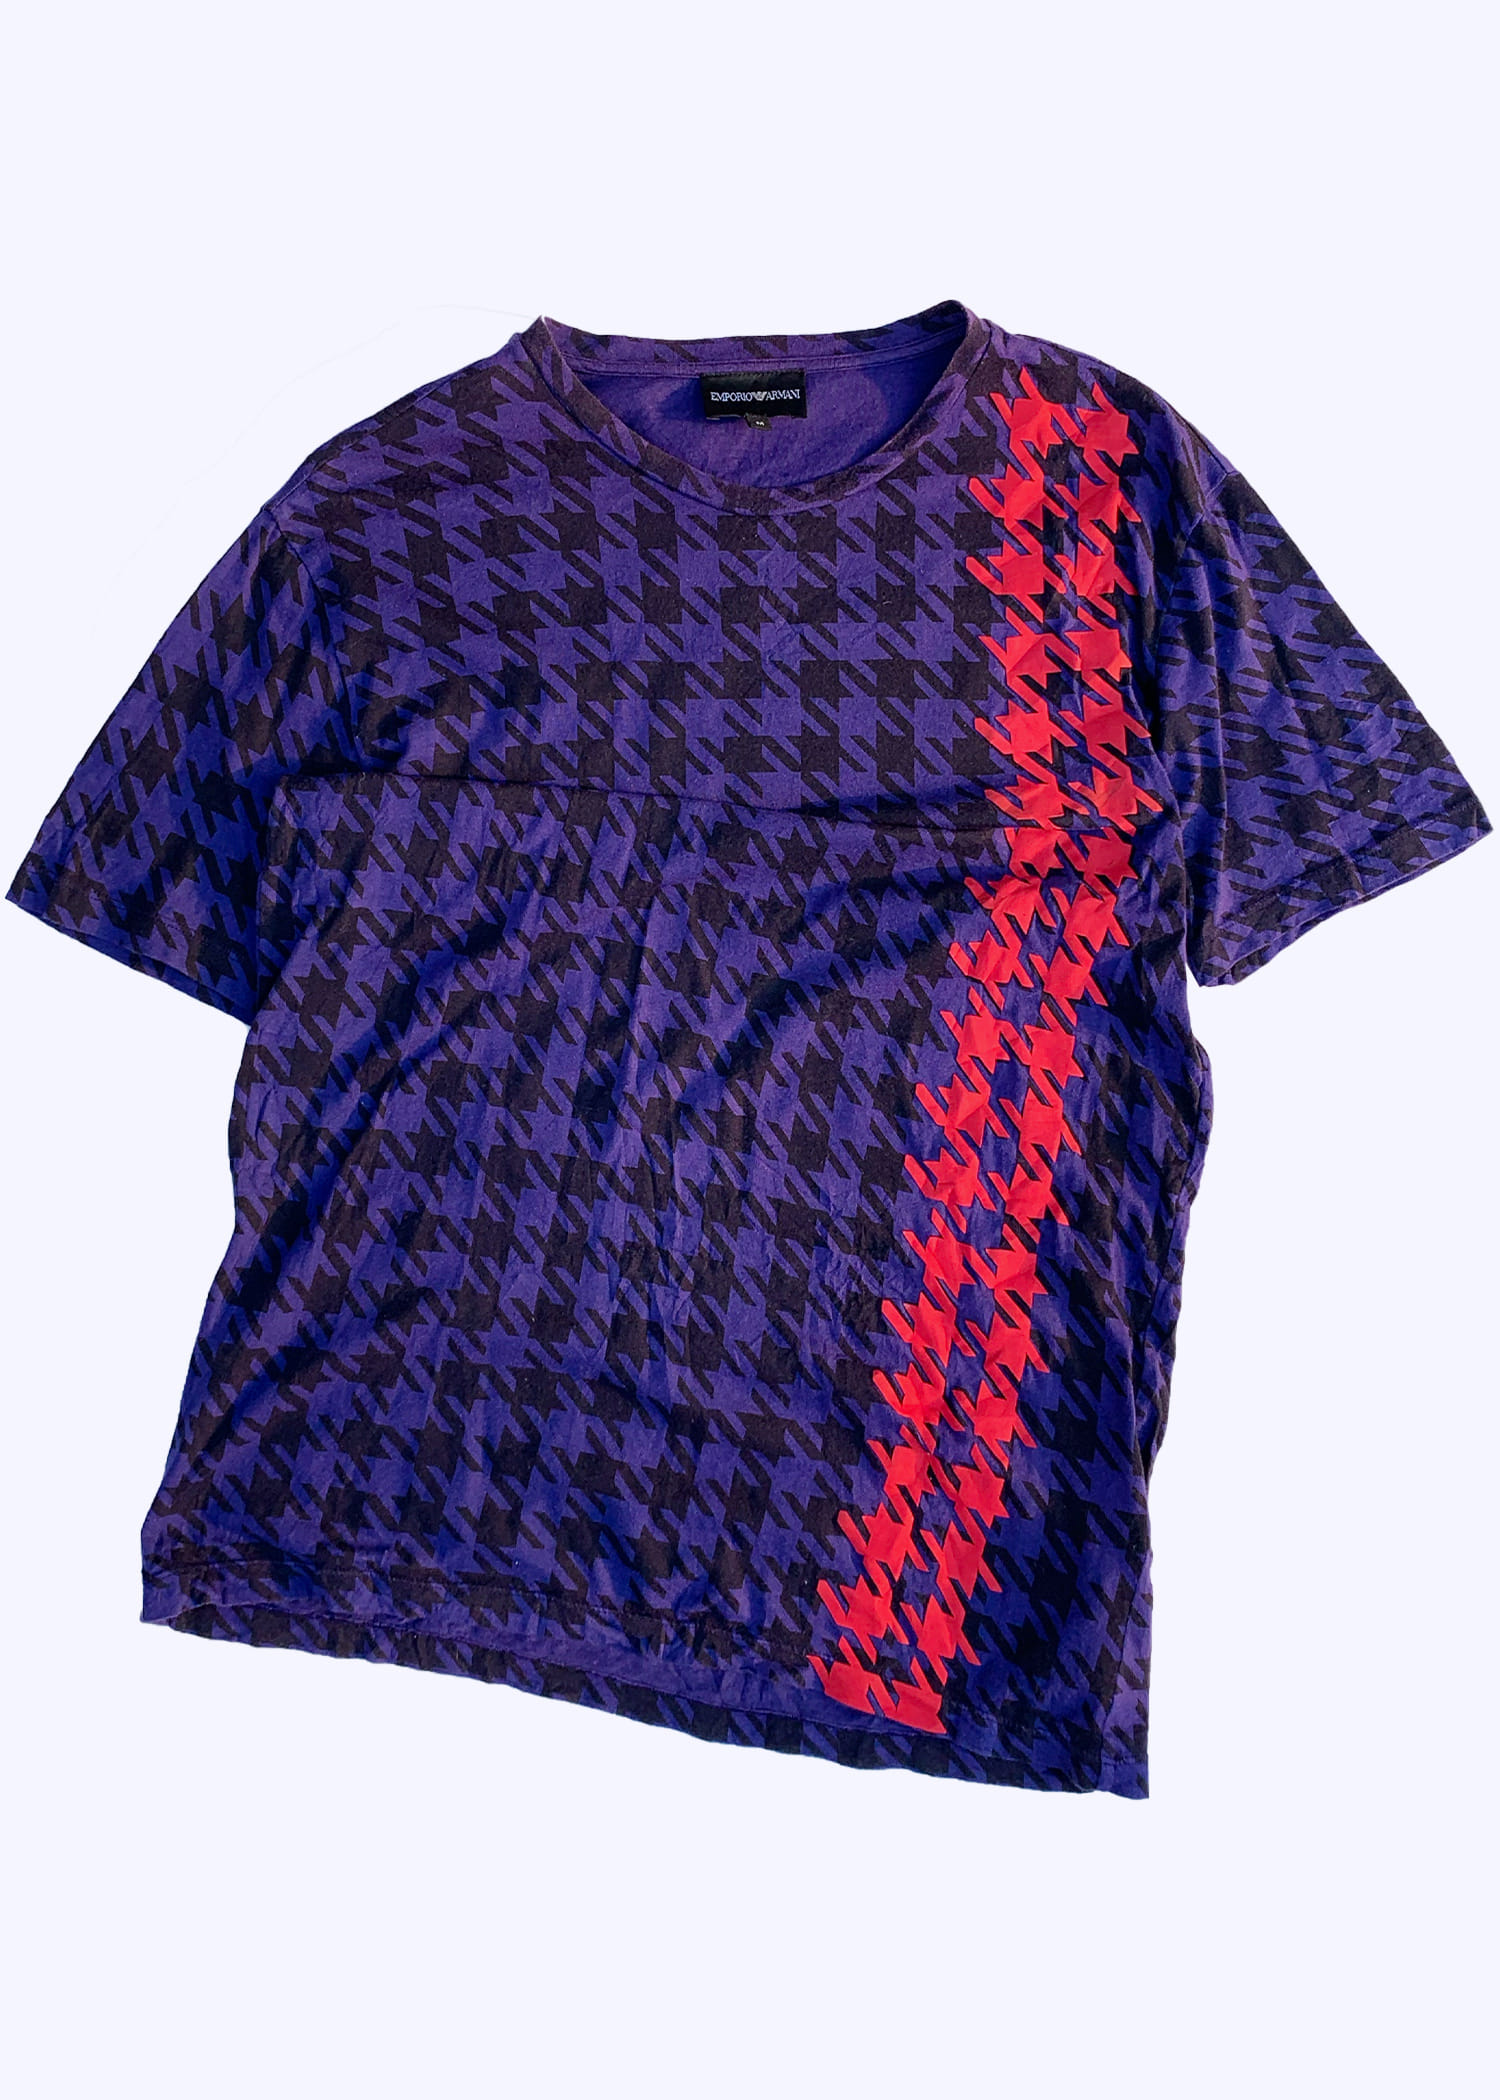 Emperio Armani purple houndtooth tshirts